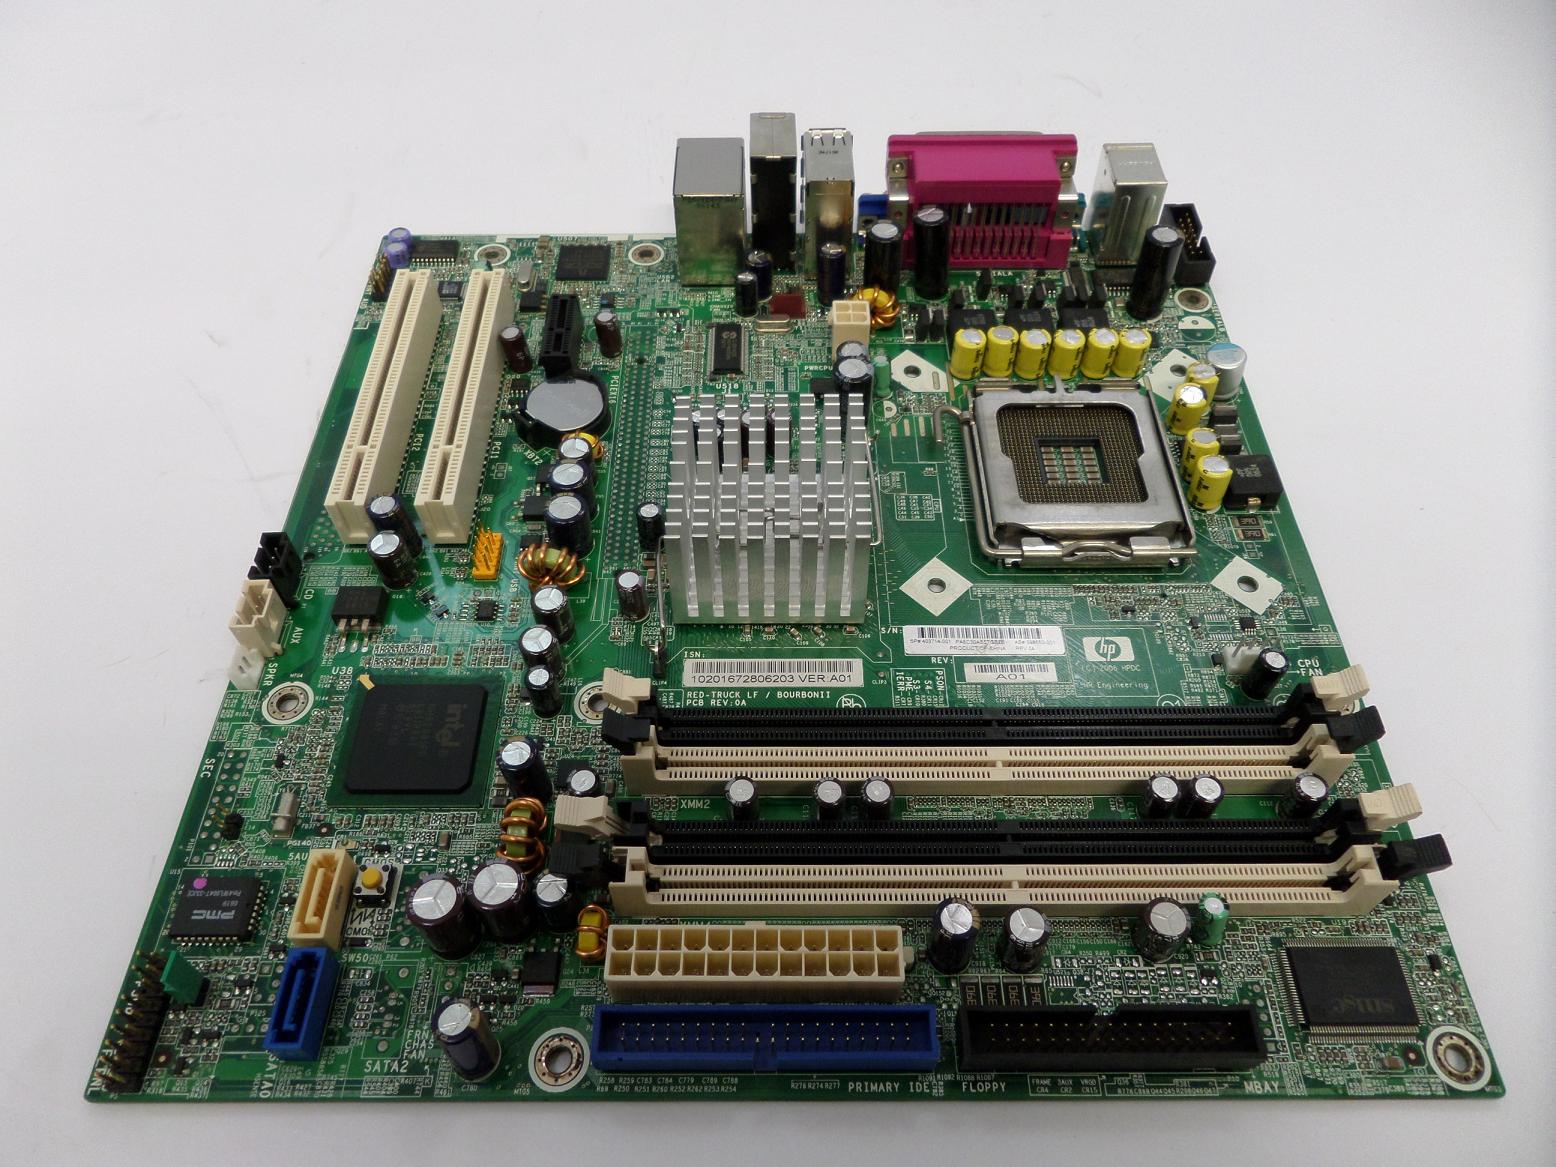 PR24523_403714-001_HP Intel Socket LGA775 Motherboard - Image4